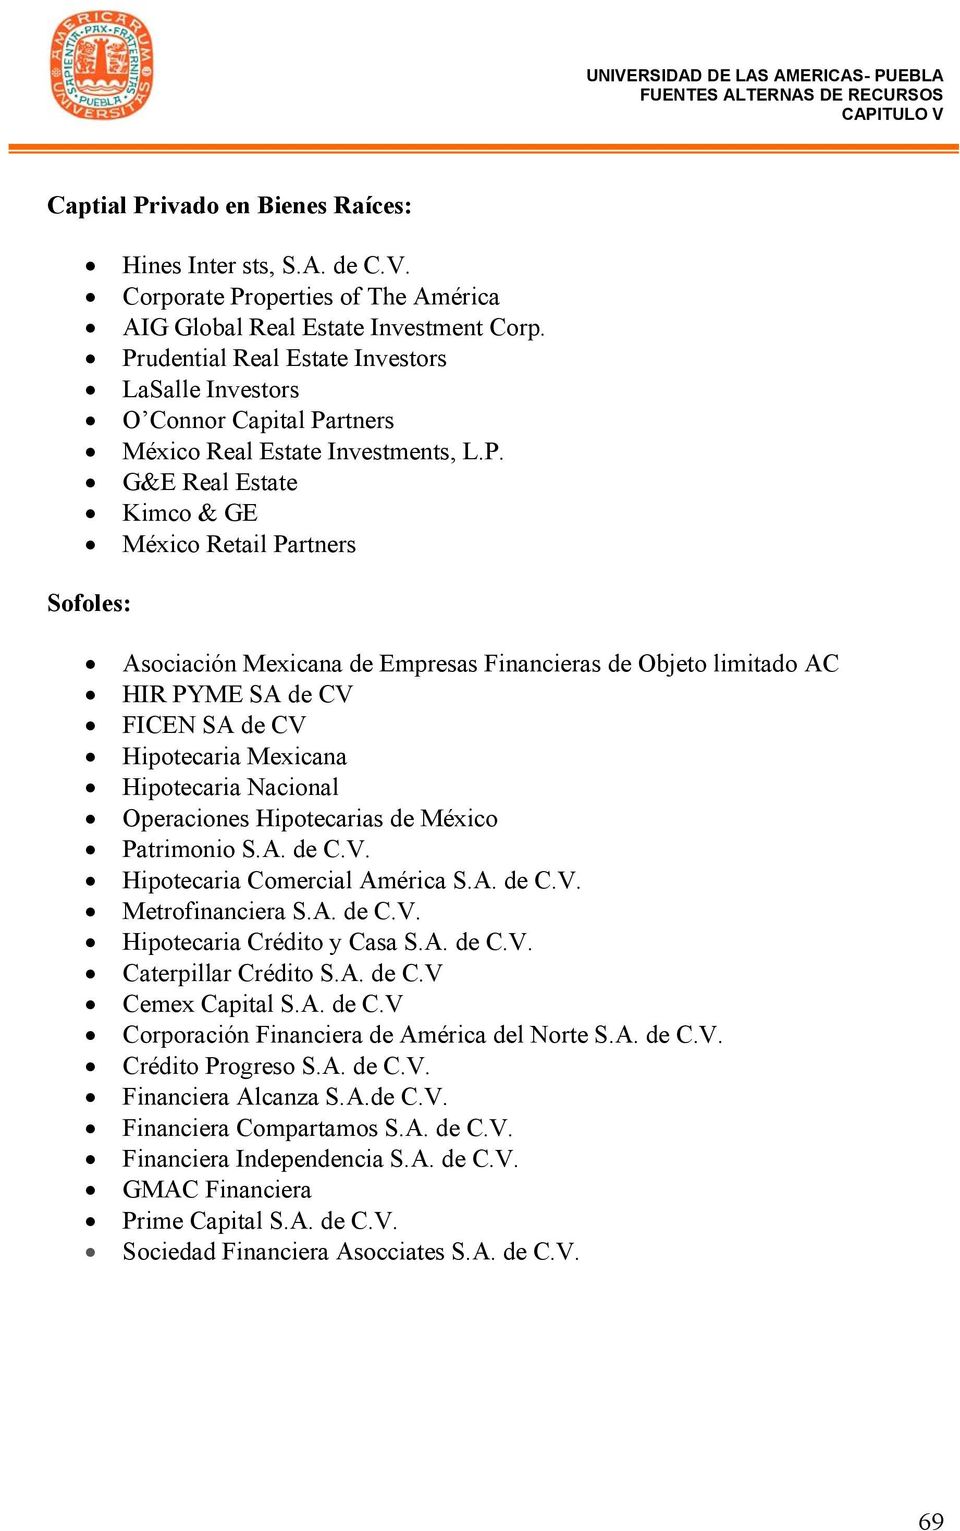 Empresas Financieras de Objeto limitado AC HIR PYME SA de CV FICEN SA de CV Hipotecaria Mexicana Hipotecaria Nacional Operaciones Hipotecarias de México Patrimonio S.A. de C.V. Hipotecaria Comercial América S.